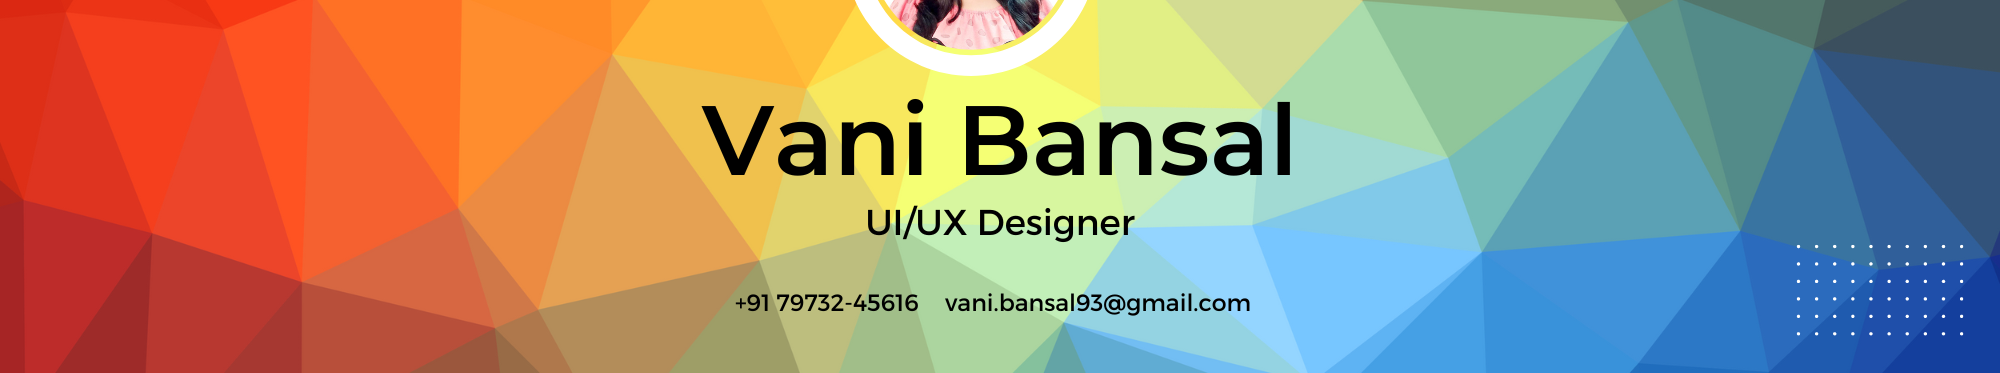 Vani Bansal のプロファイルバナー